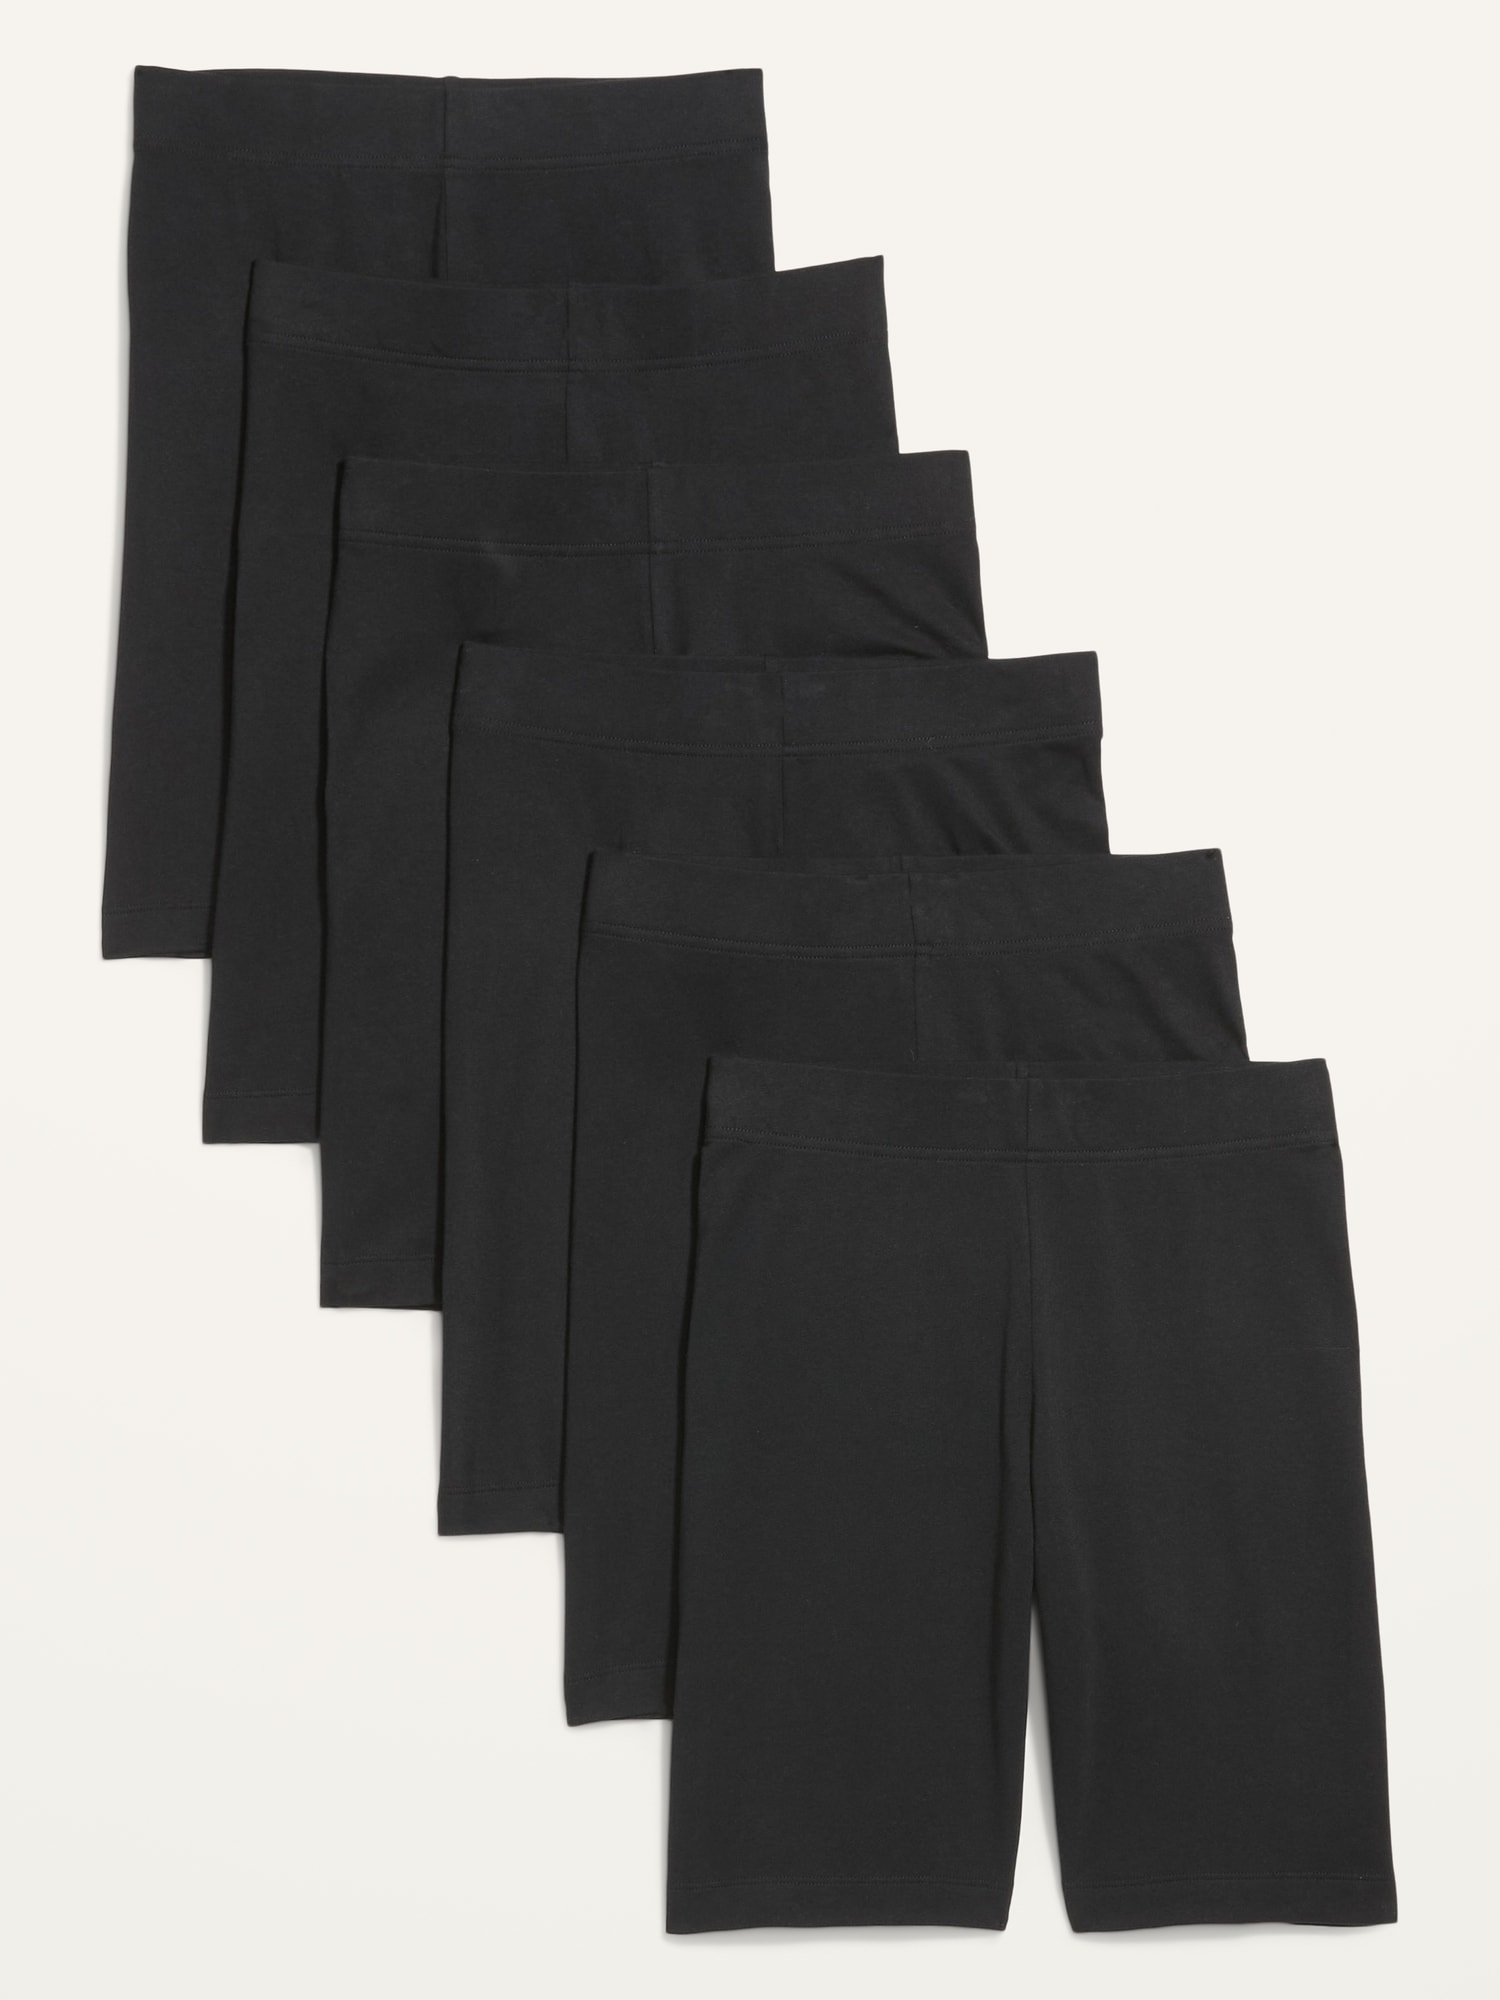 High-Waisted Biker Shorts 6-Pack for Women -- 8-inch inseam